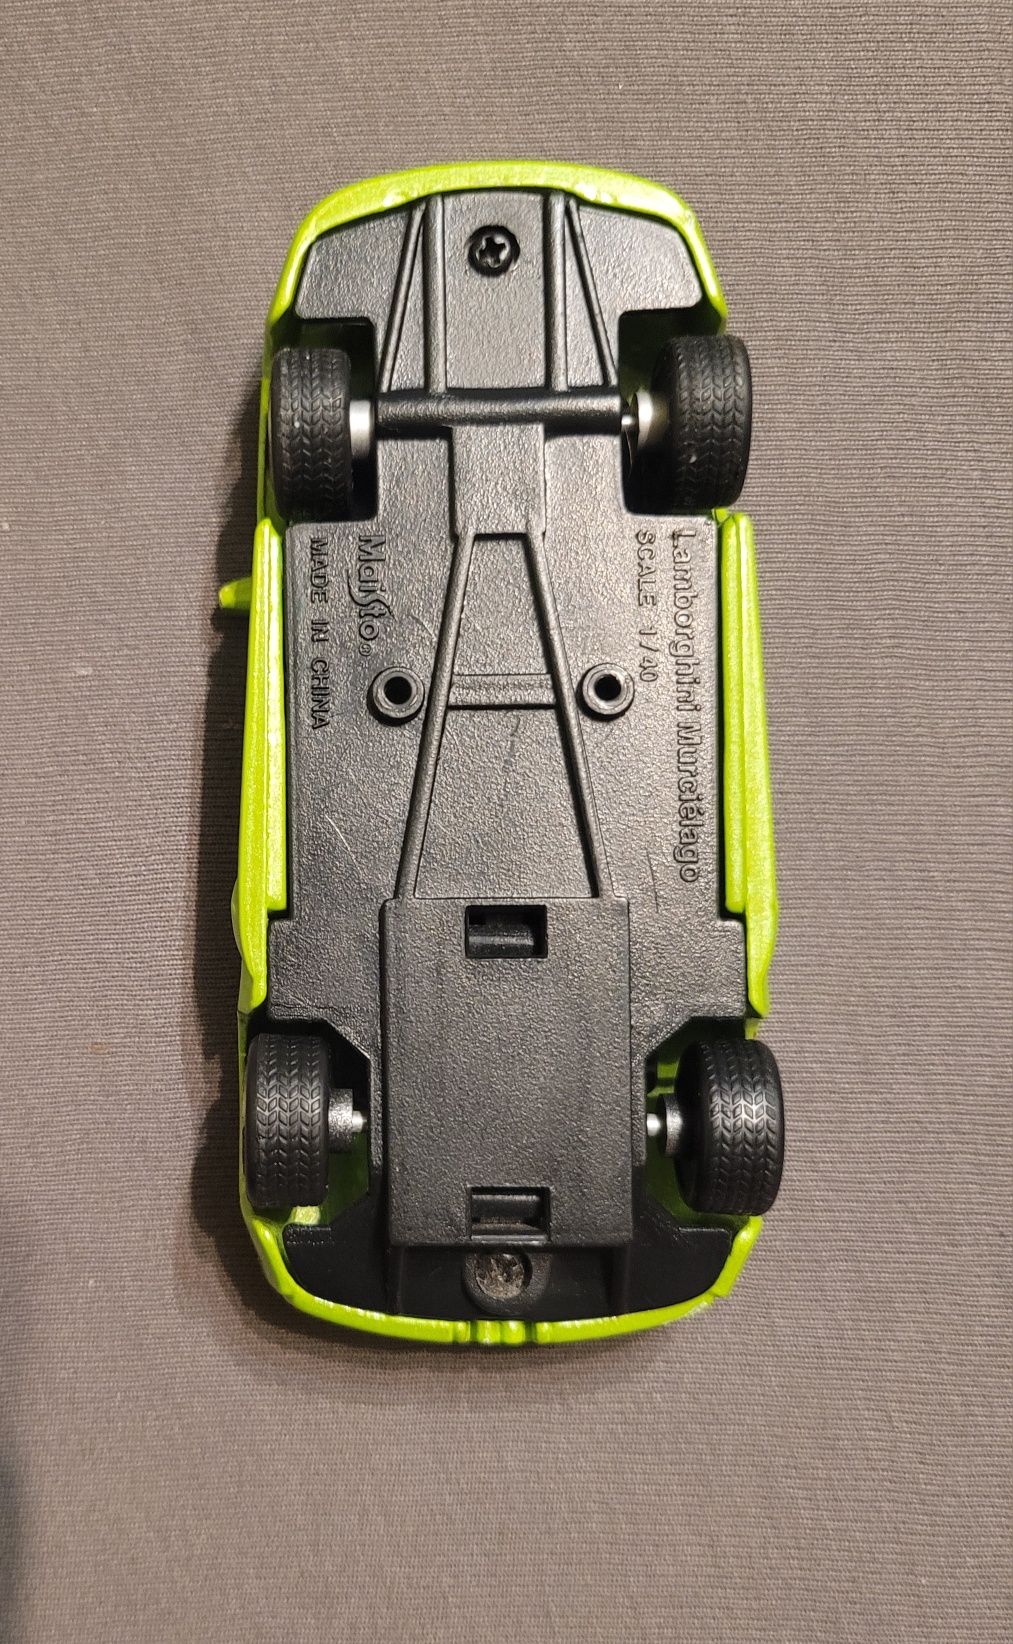 Samochód zabawka Lamborghini